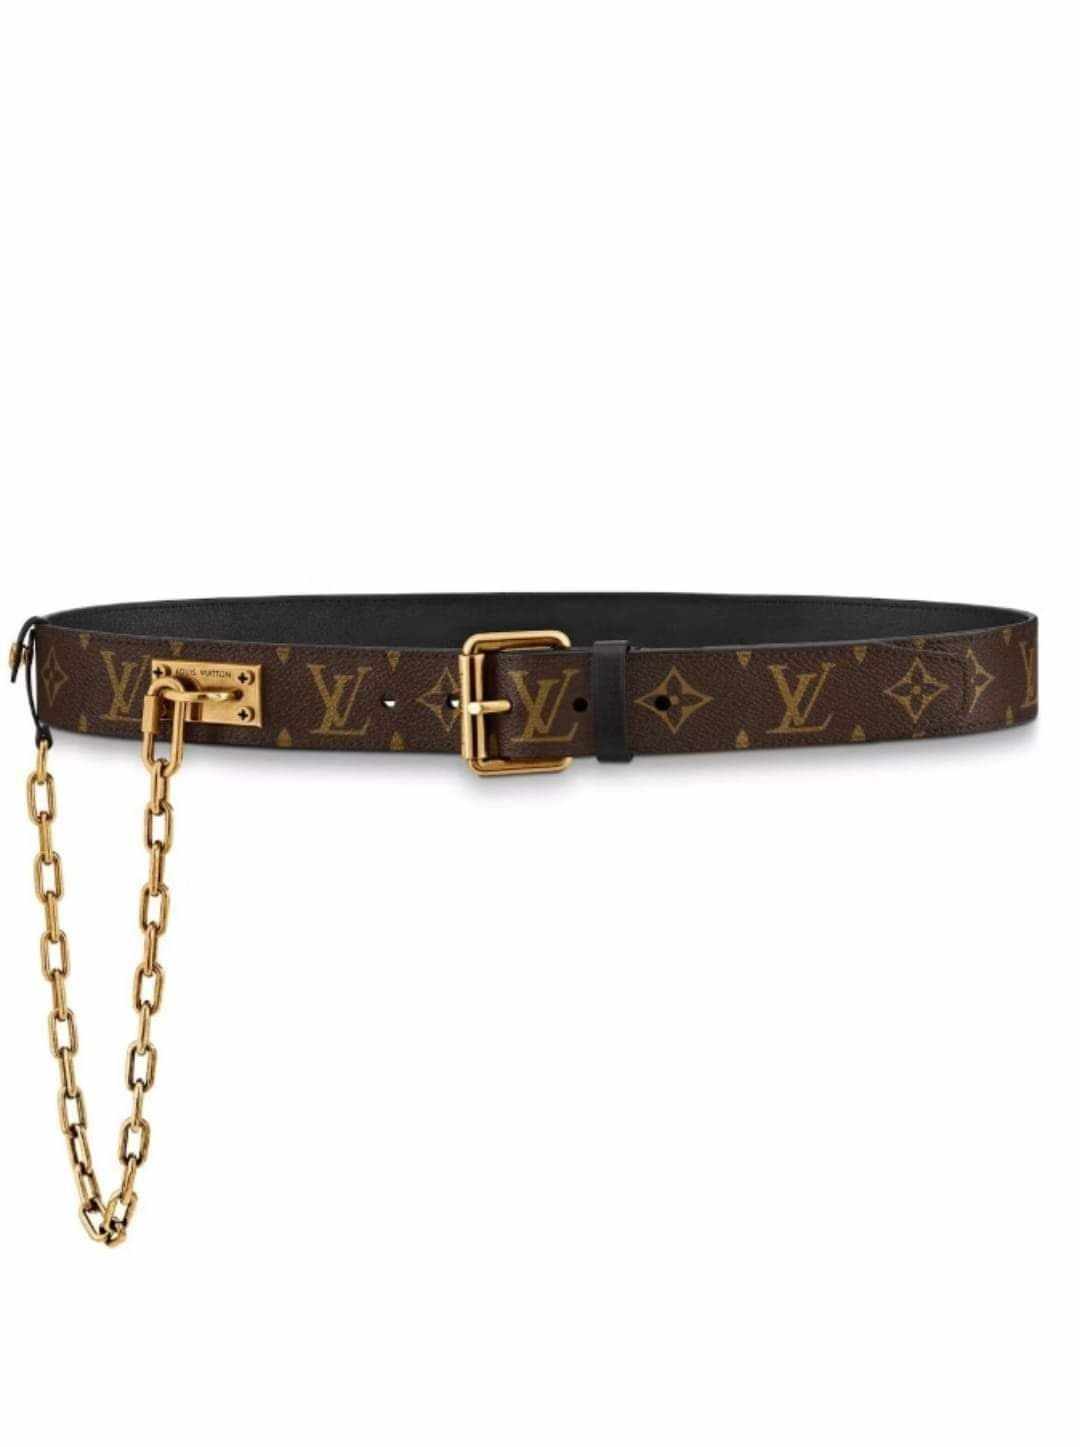 Louis Vuitton LV Padlock Bracelet Black Leather. Size 17